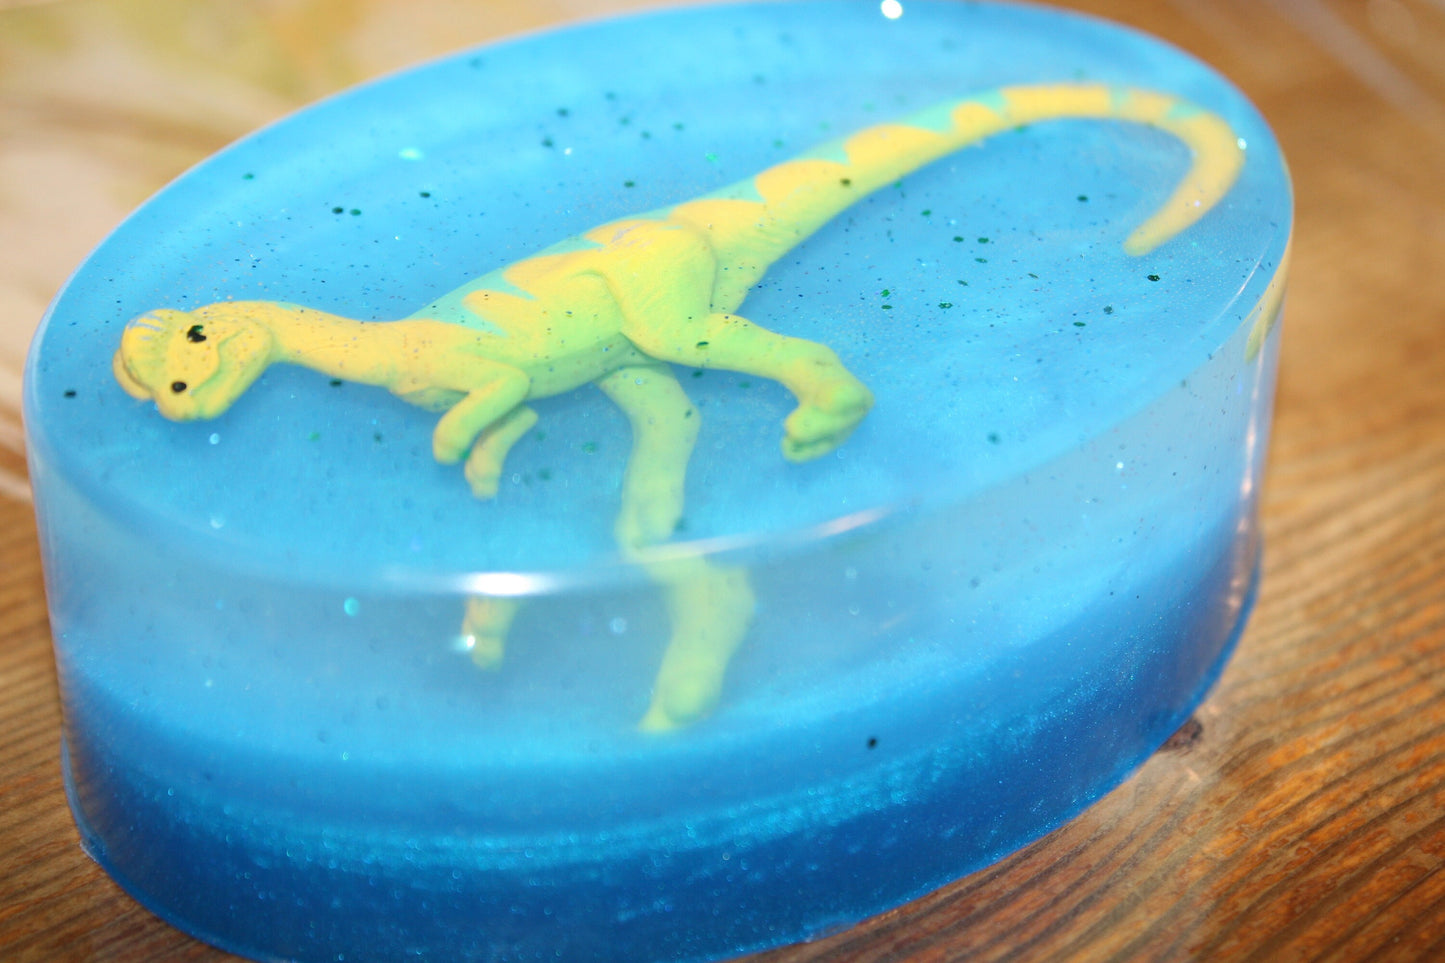 Dinosaur Soap, transparent soap with Toy Dinosaur,Birthday Gift soap, colourful dinosaur, handmade on Vancouver Island,Victoria, B.C. Canada